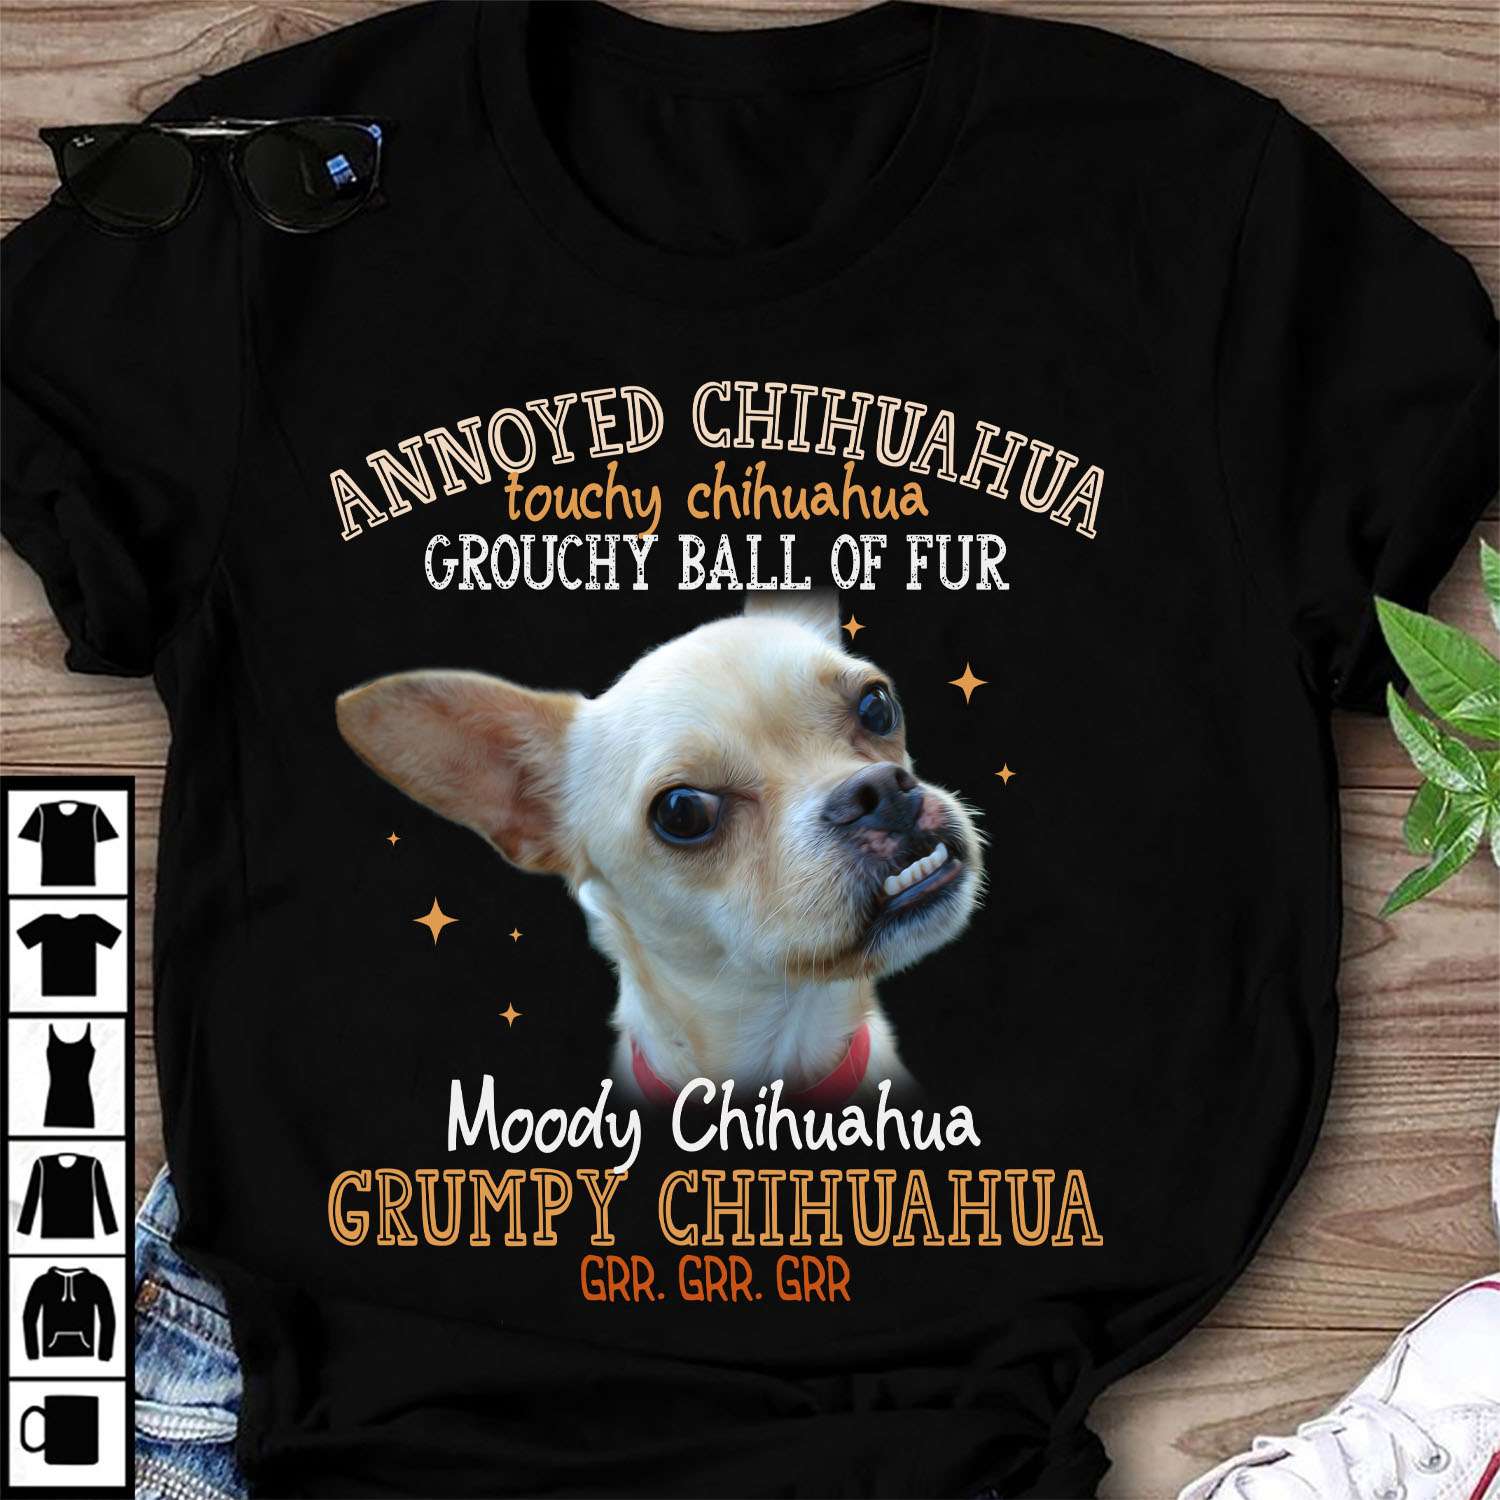 Grumpy Chihuahua - Annoyed chihuahua fouchy chihuahua grouchy ball of fur moody chihuahua grumpy chihuahua